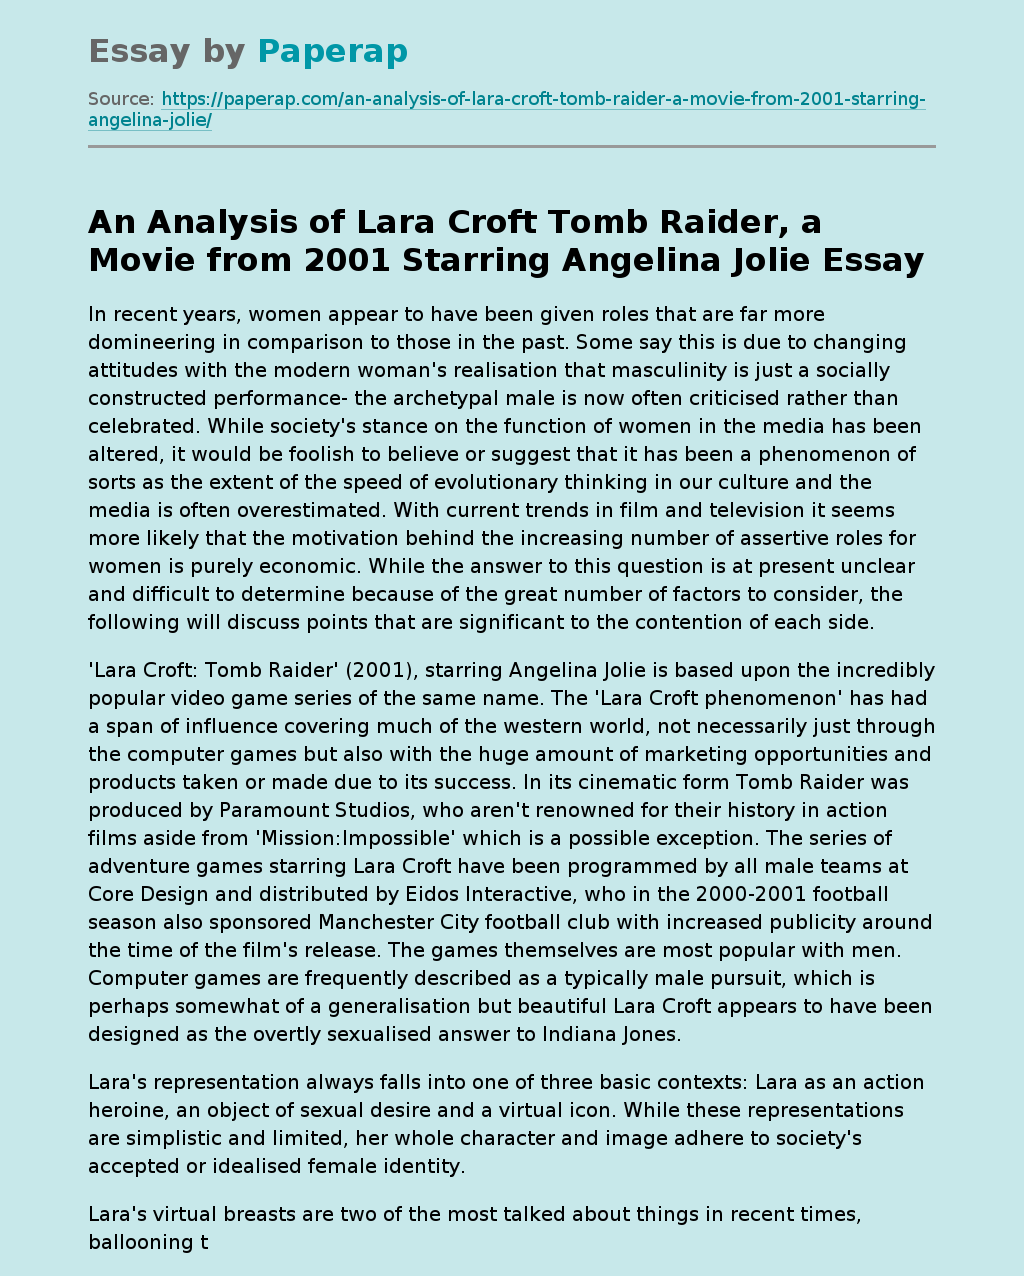 An Analysis of Lara Croft Tomb Raider, a Movie from 2001 Starring Angelina Jolie